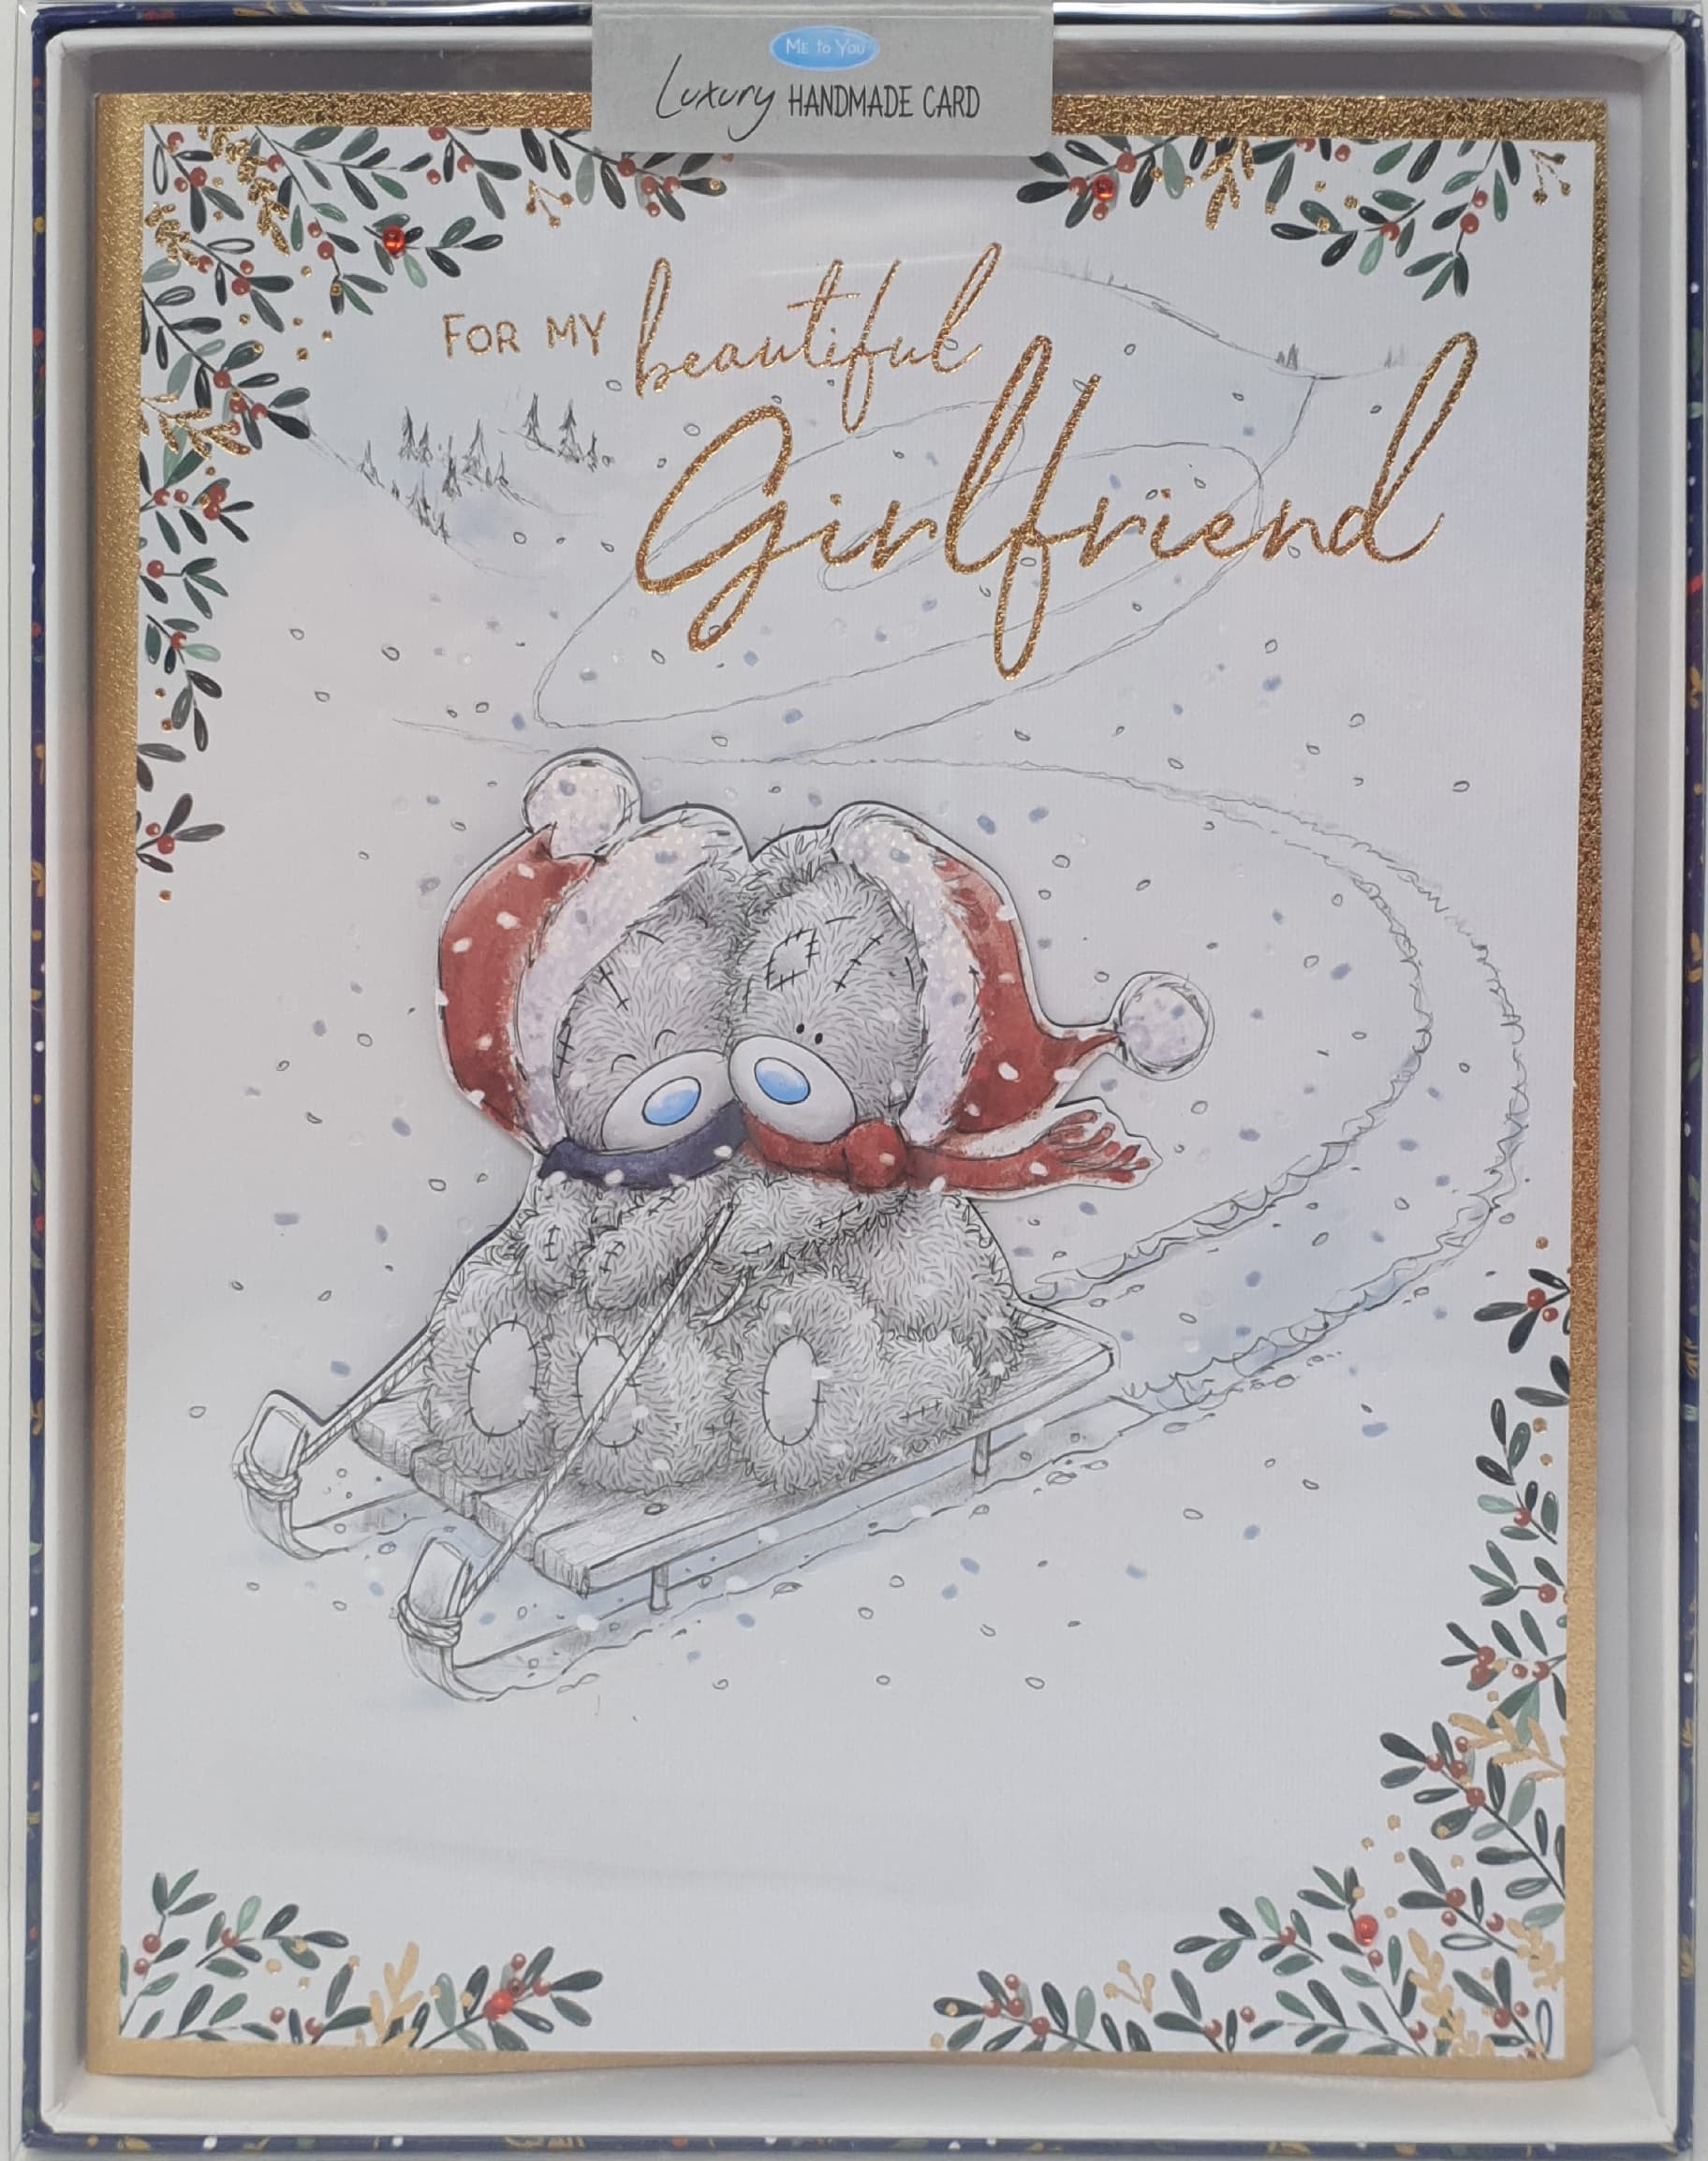 Girlfriend Christmas Card - Beautiful Girlfriend / Two Bears on Sled (Card In A Presentation Box)